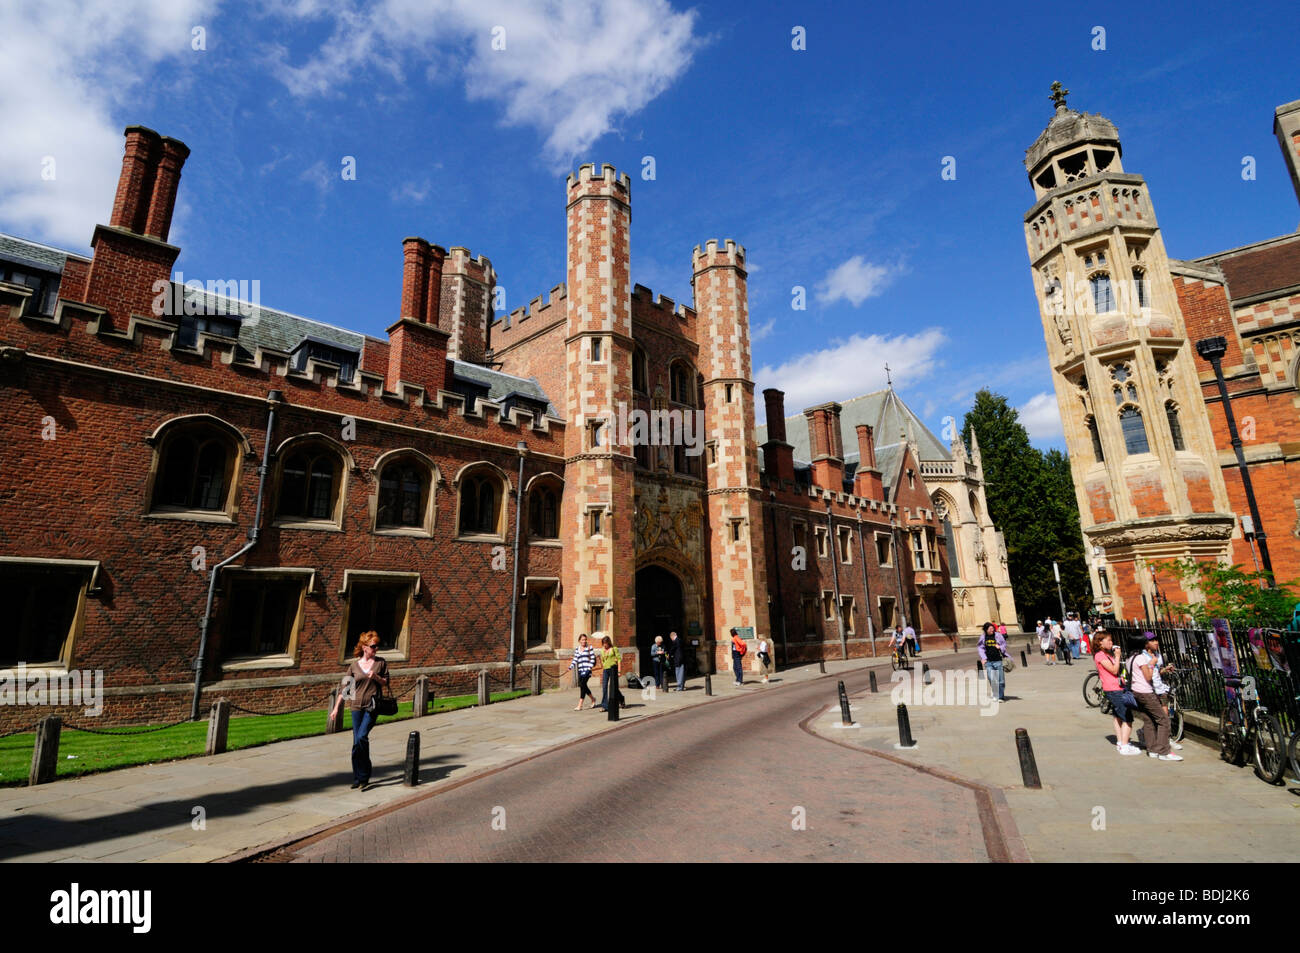 St John's College, Cambridge, England UK Banque D'Images